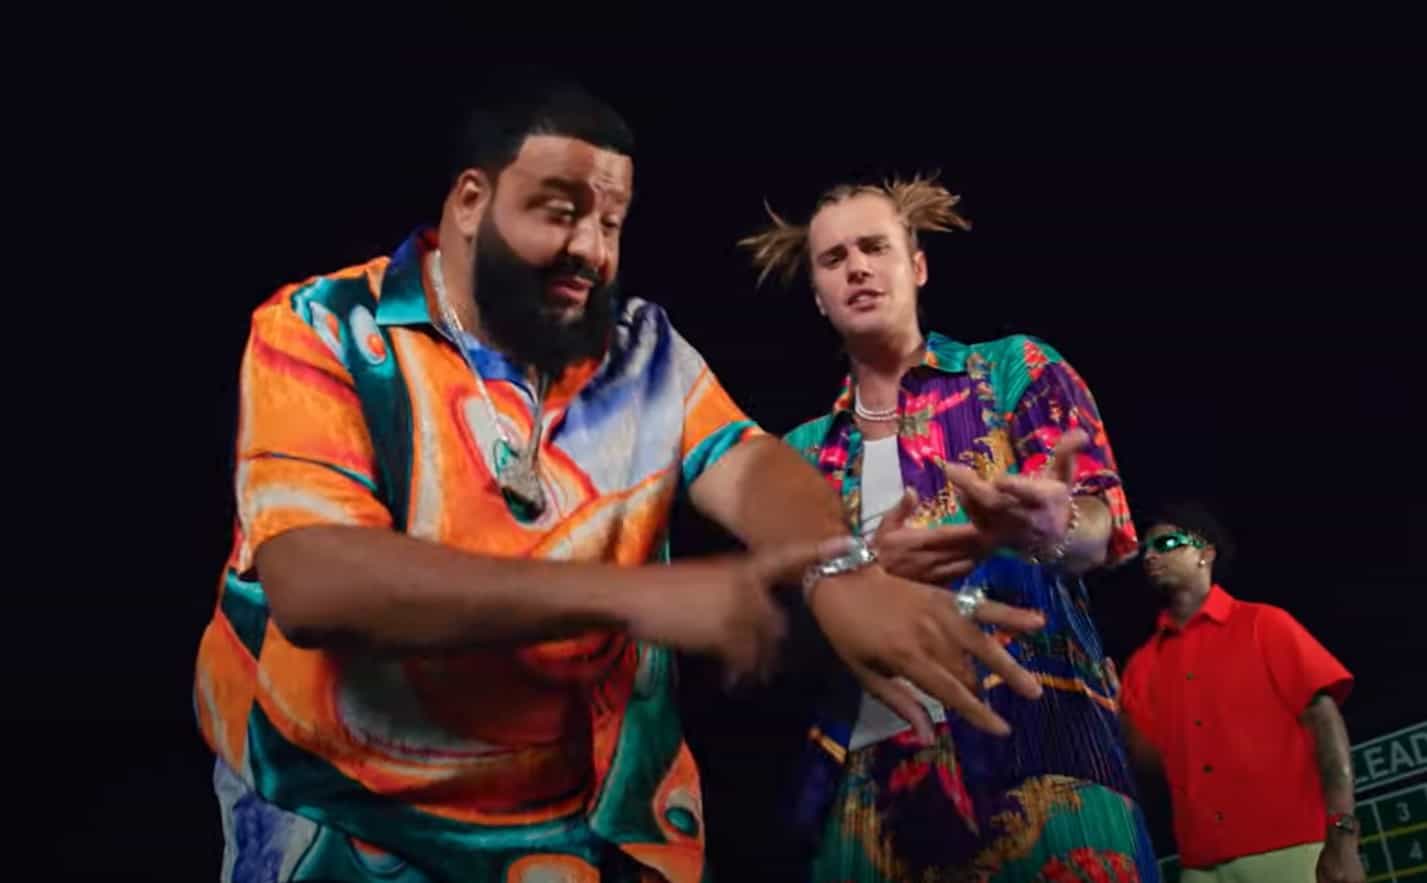 New Video DJ Khaled - Let It Go (Feat. Justin Bieber & 21 Savage)